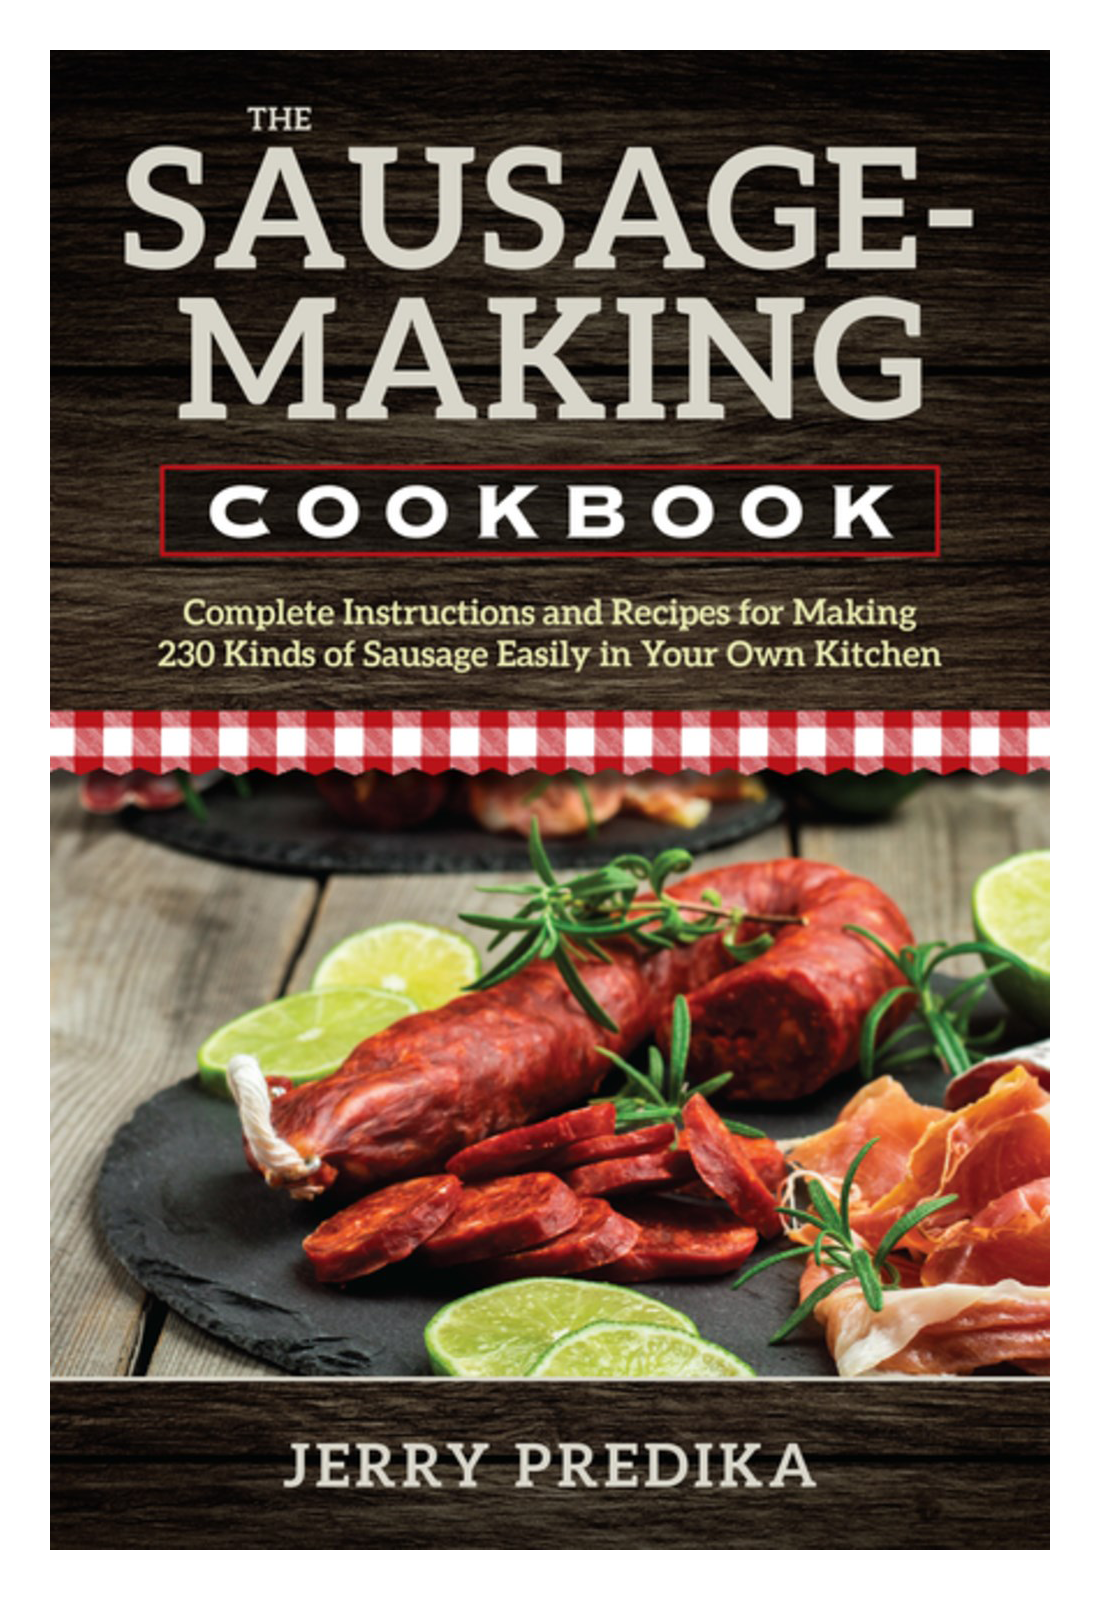 The Sausage-Making Cookbook by Jerry Predika | Bass Pro Shops